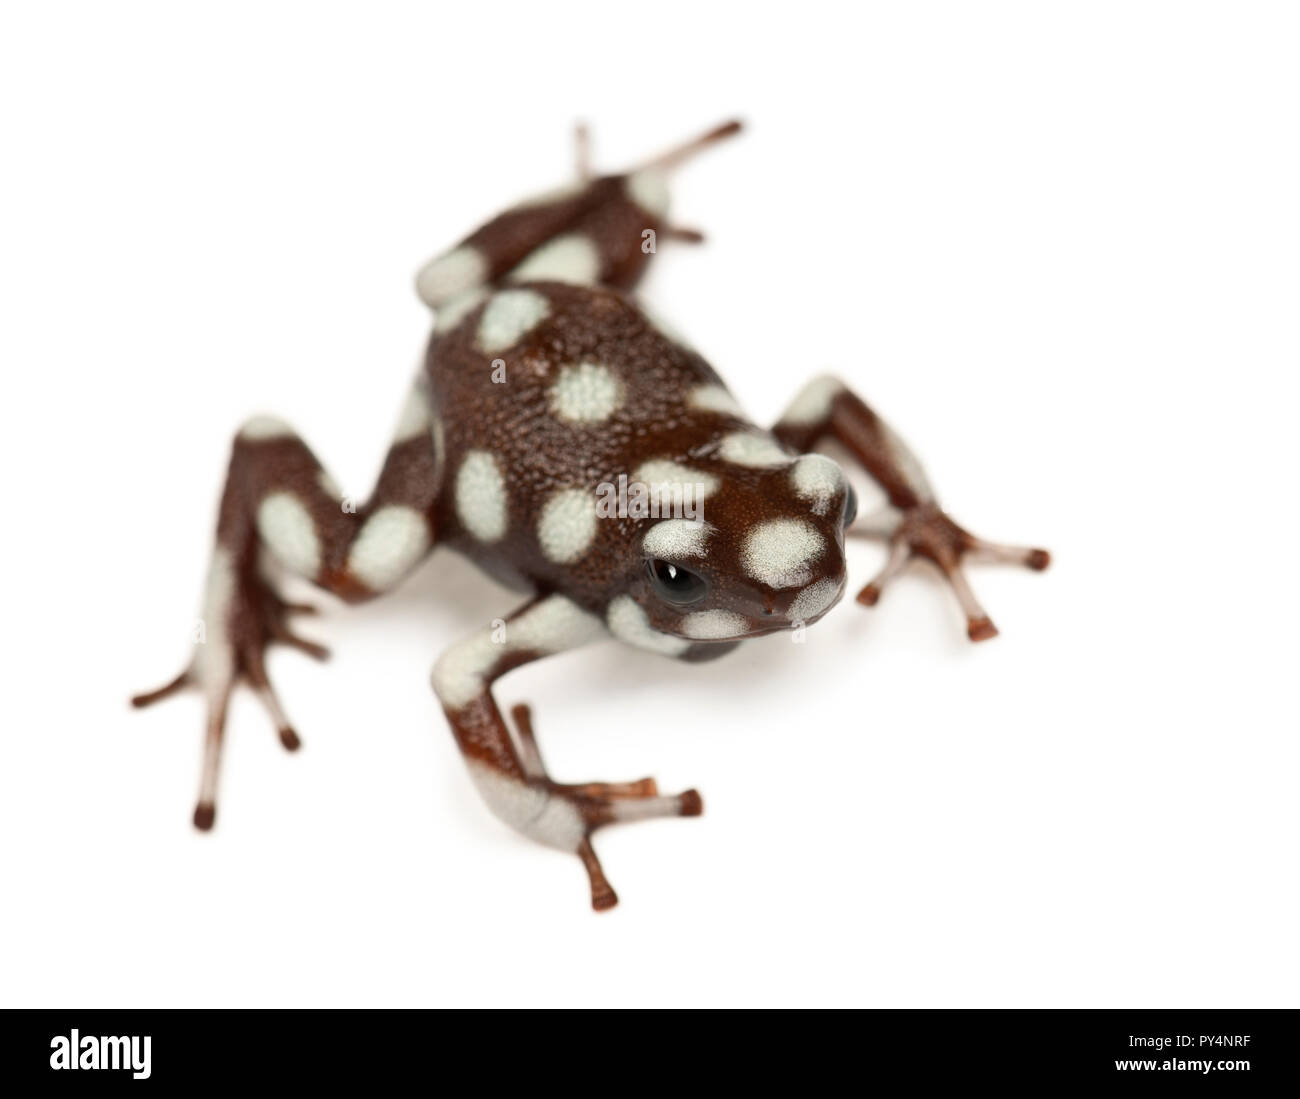 Mara√±√≥n Poison Frog or Rana Venenosa, Ranitomeya mysteriosus, against white background Stock Photo